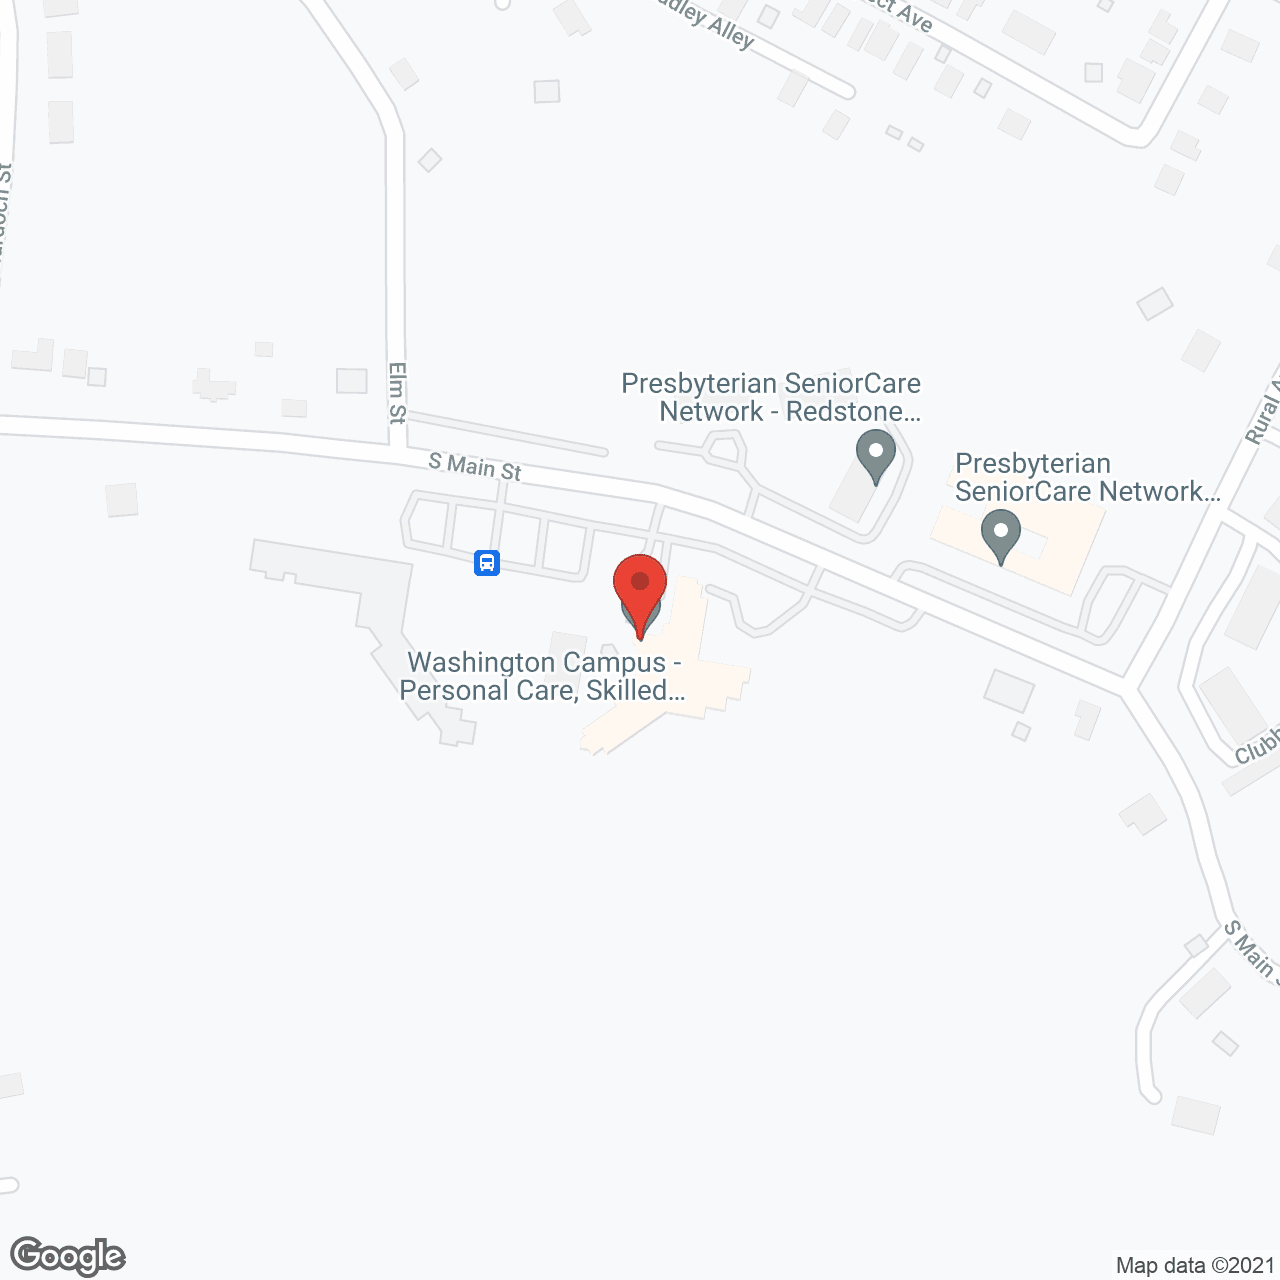 Presbyterian Seniorcare in google map